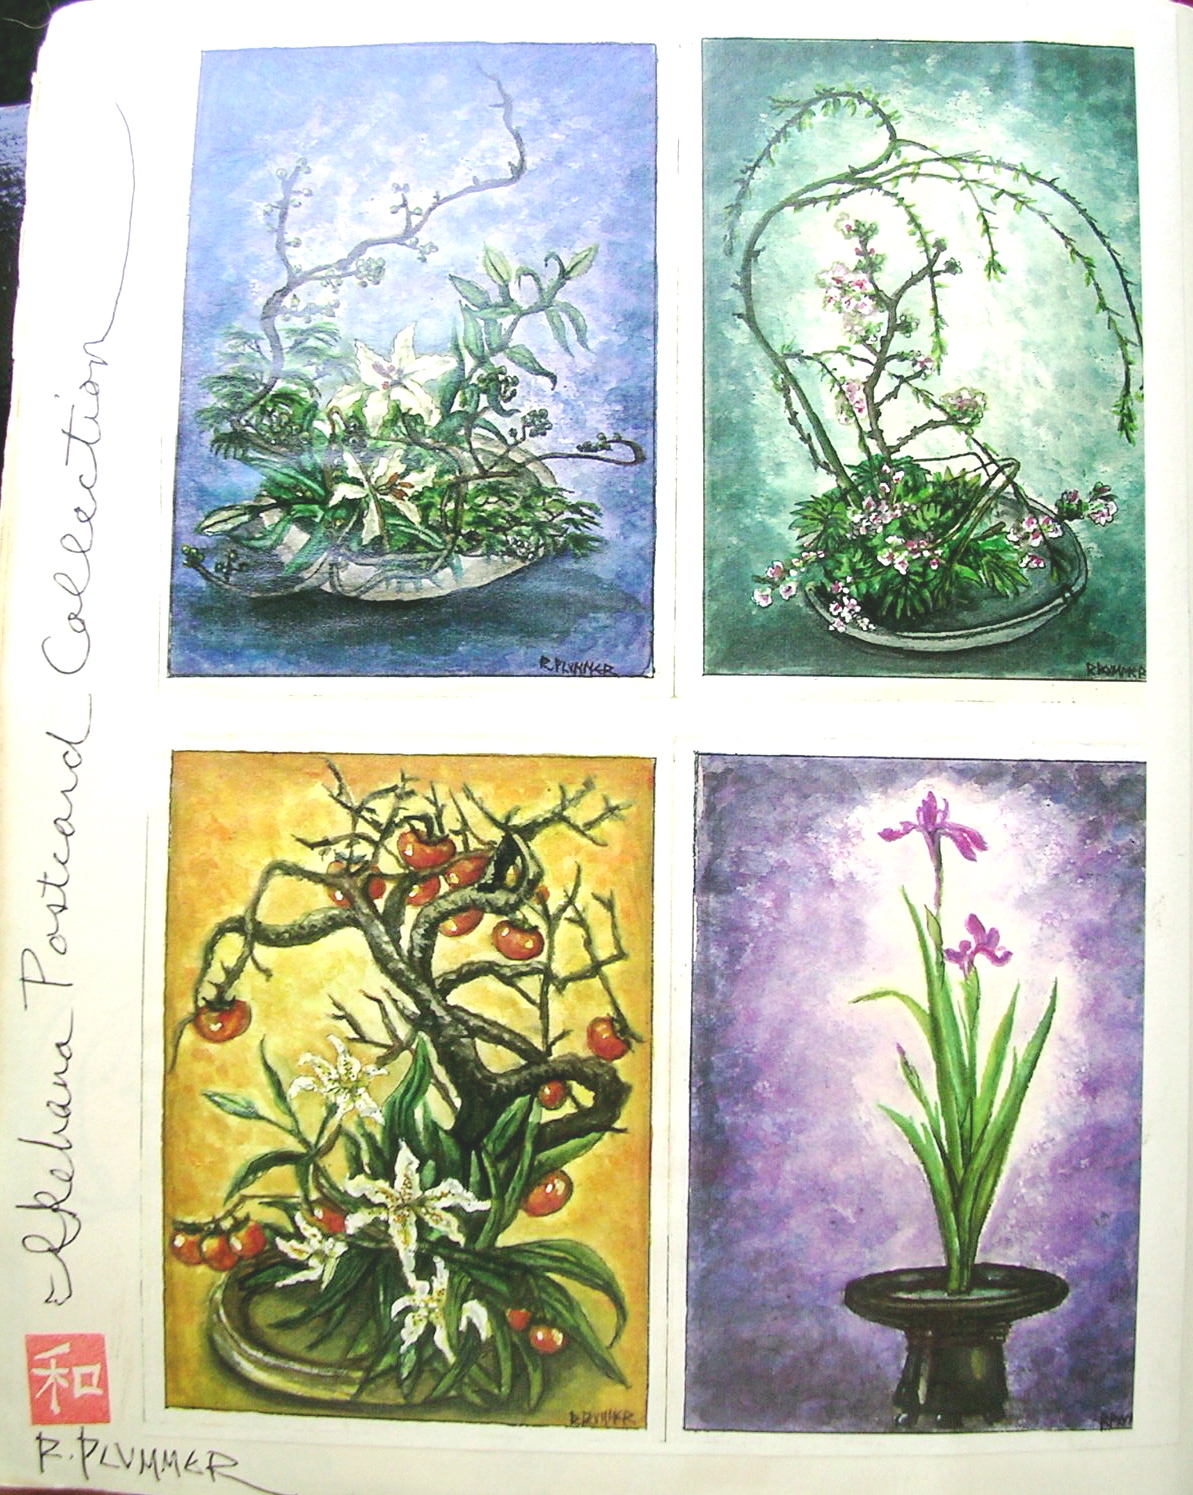 Studies of Ikebana Flower arranging